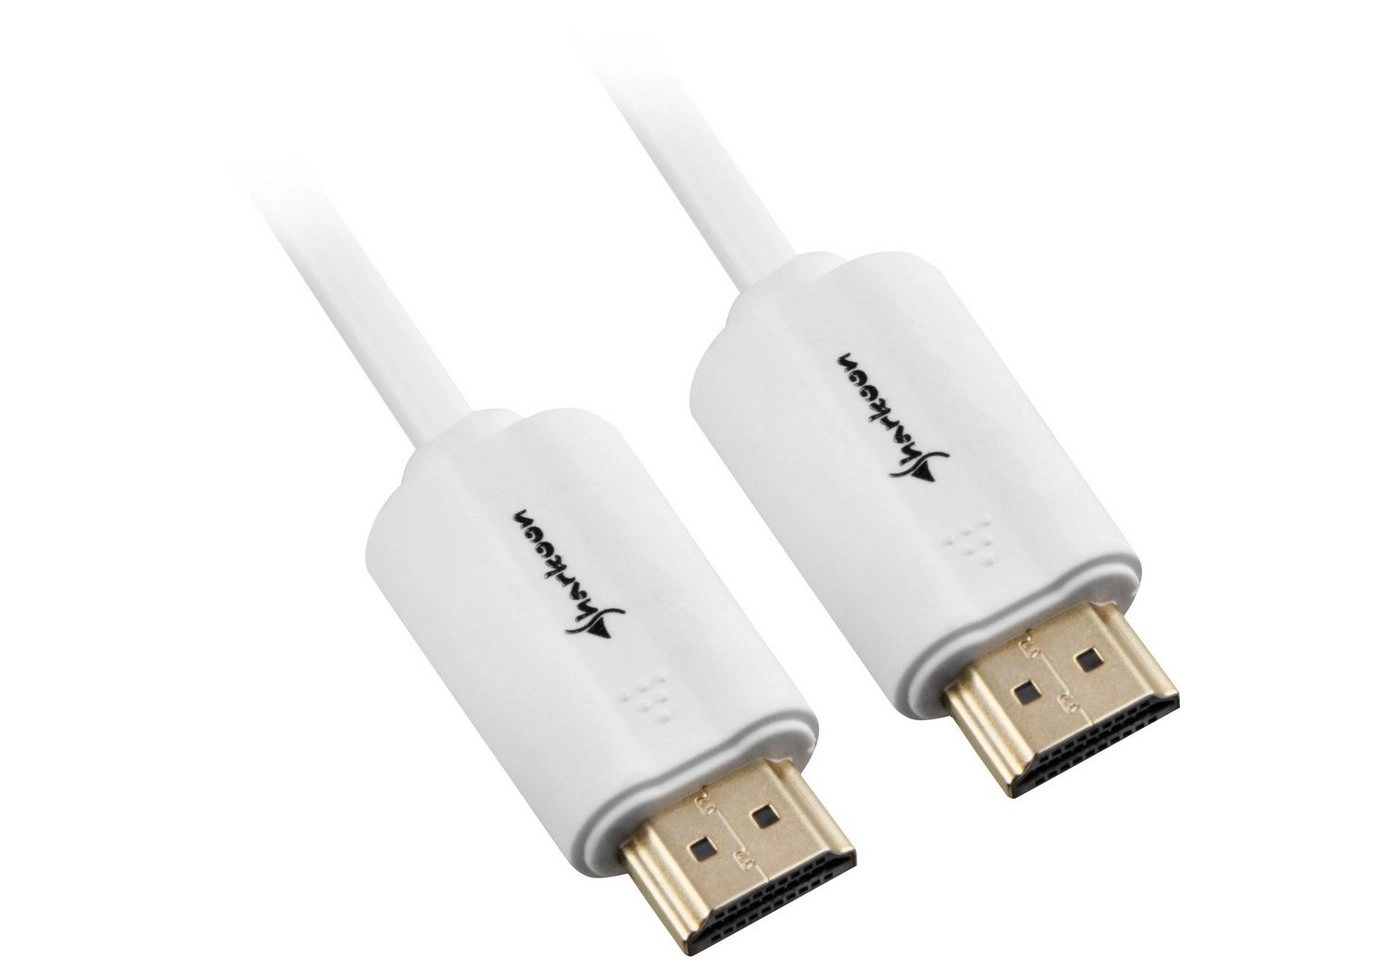 Kabel HDMI Stecker > HDMI Stecker